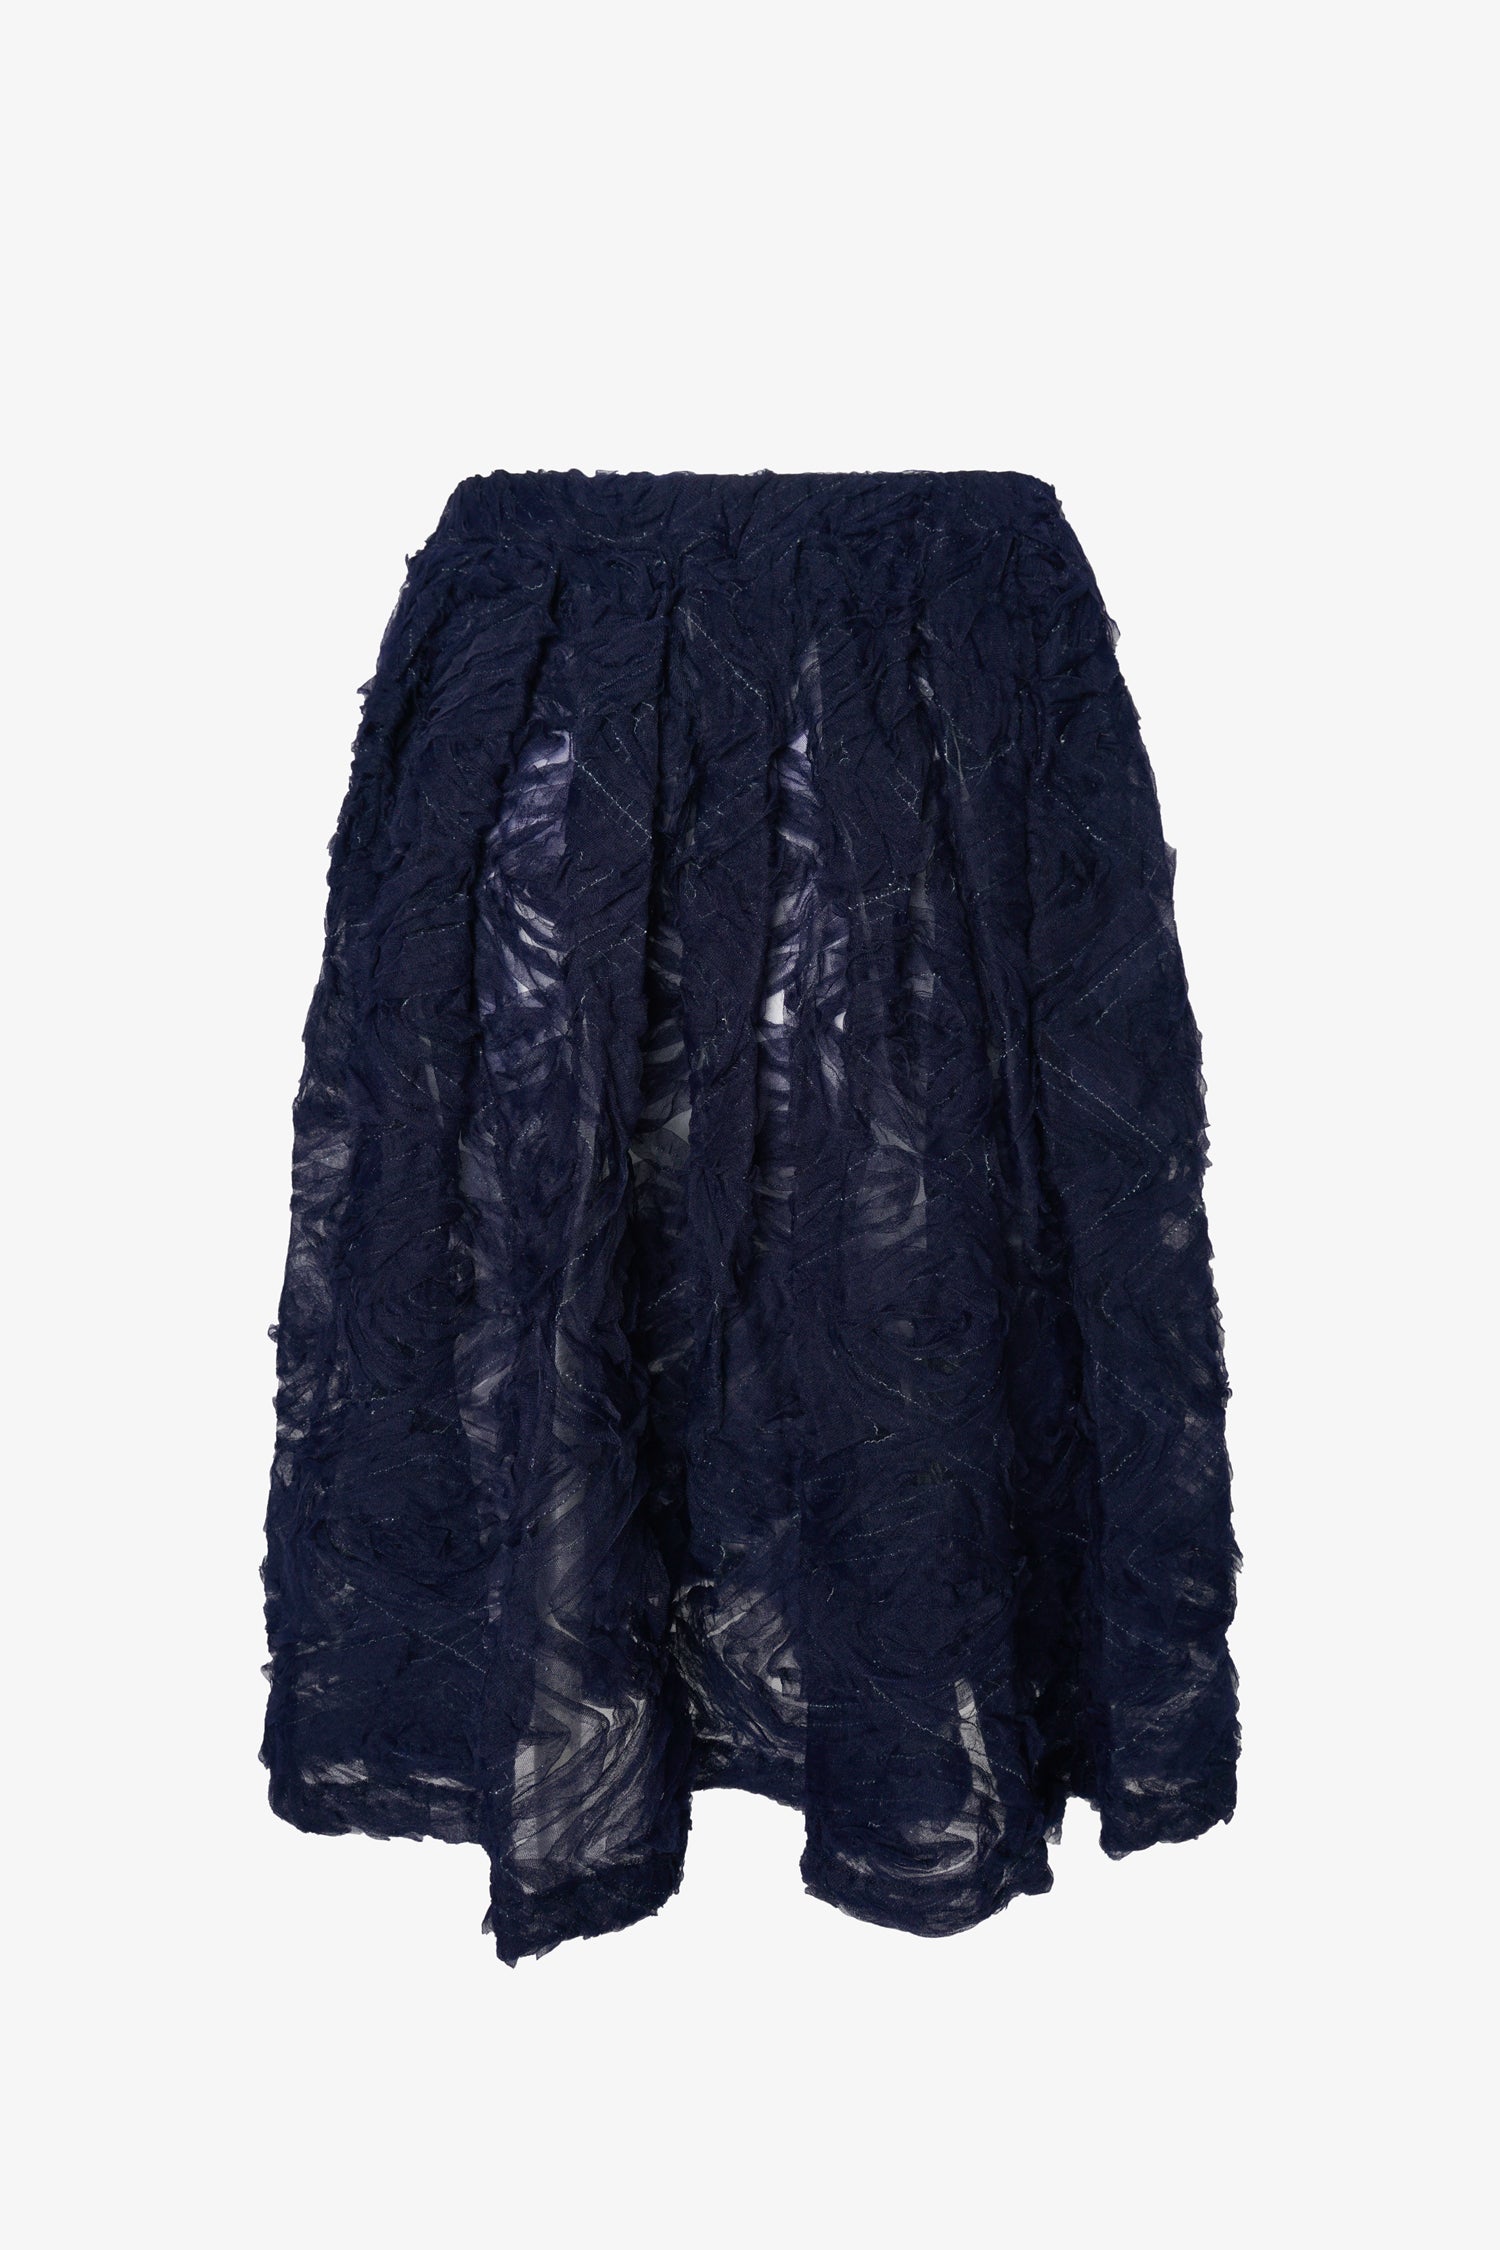 Selectshop FRAME - COMME DES GARÇONS GIRL Semi-Sheer Textured Skirt Bottoms Dubai